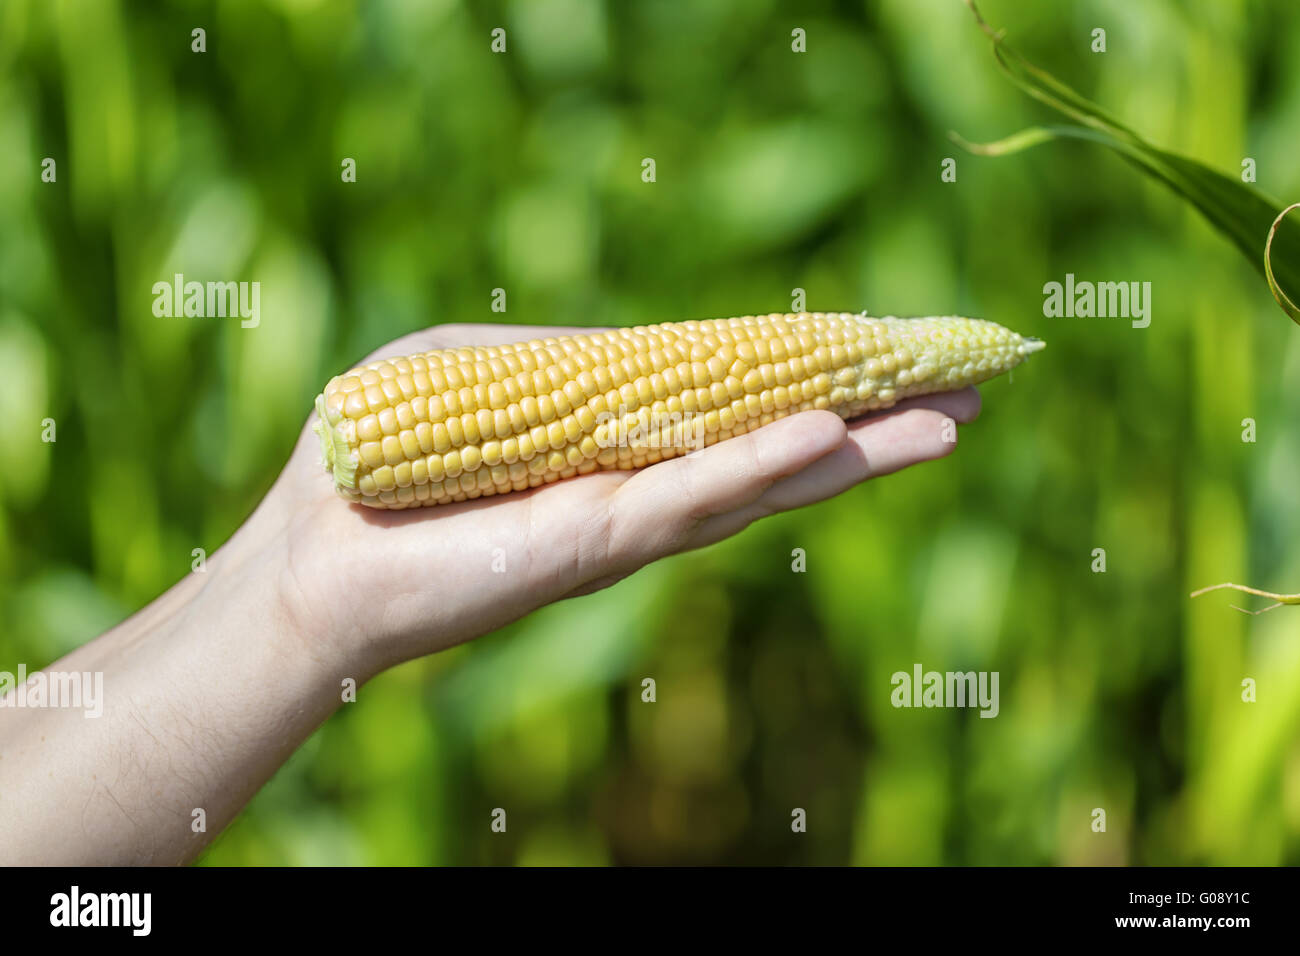 An ear of corn in hand Stock Photo